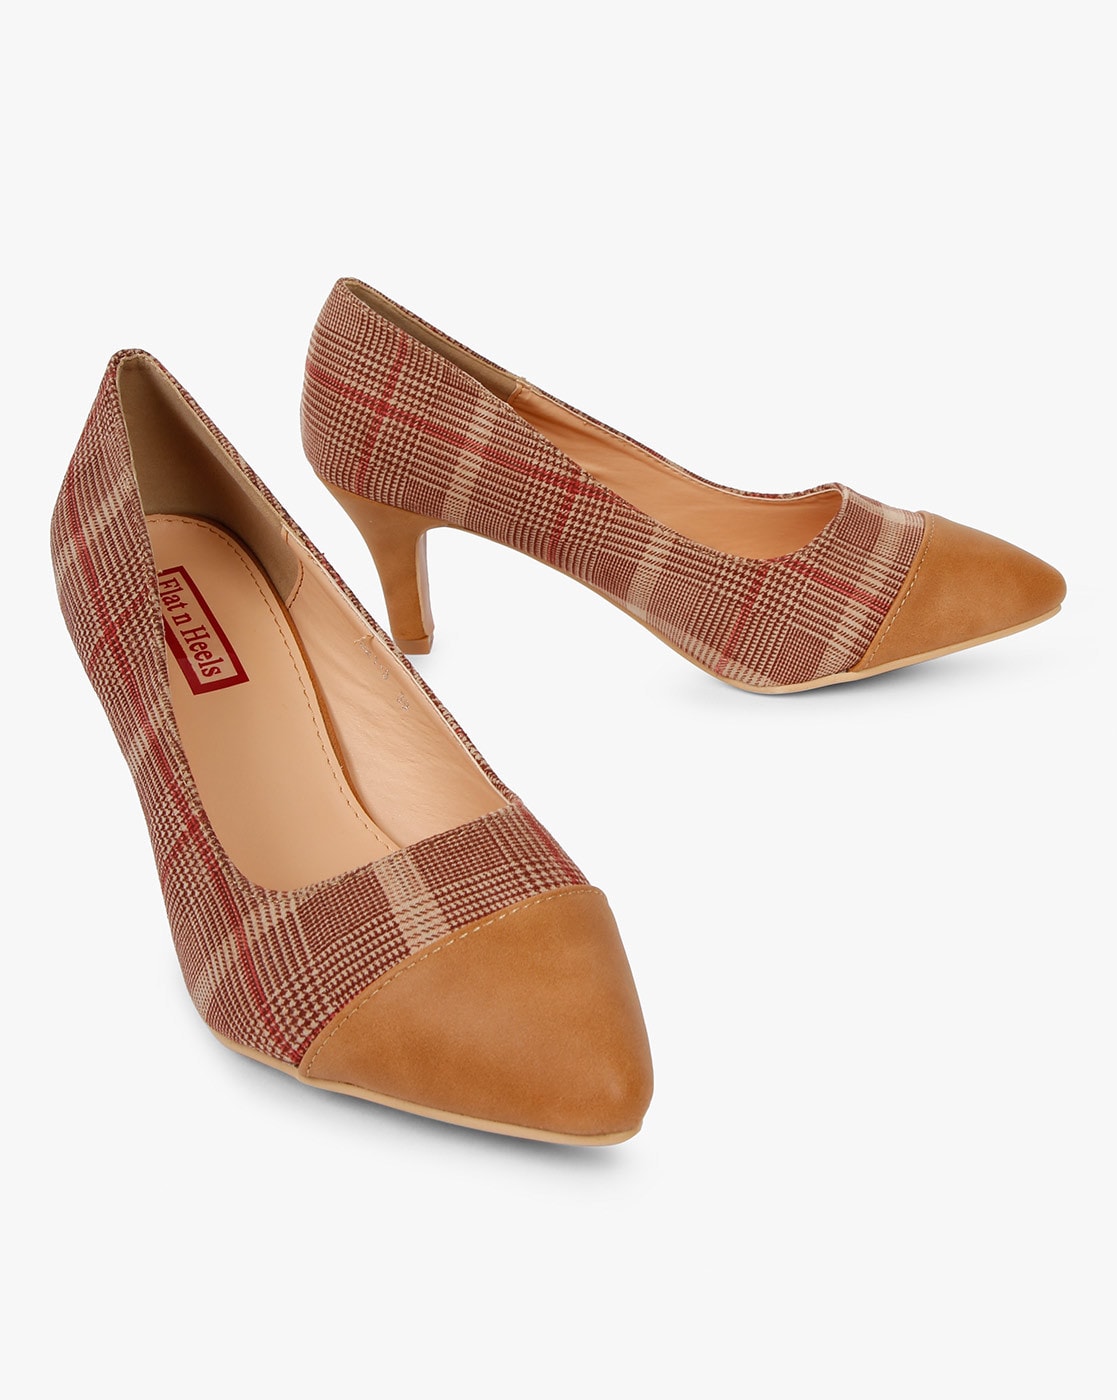 Buy Tan Brown \u0026 Red Heeled Sandals for 